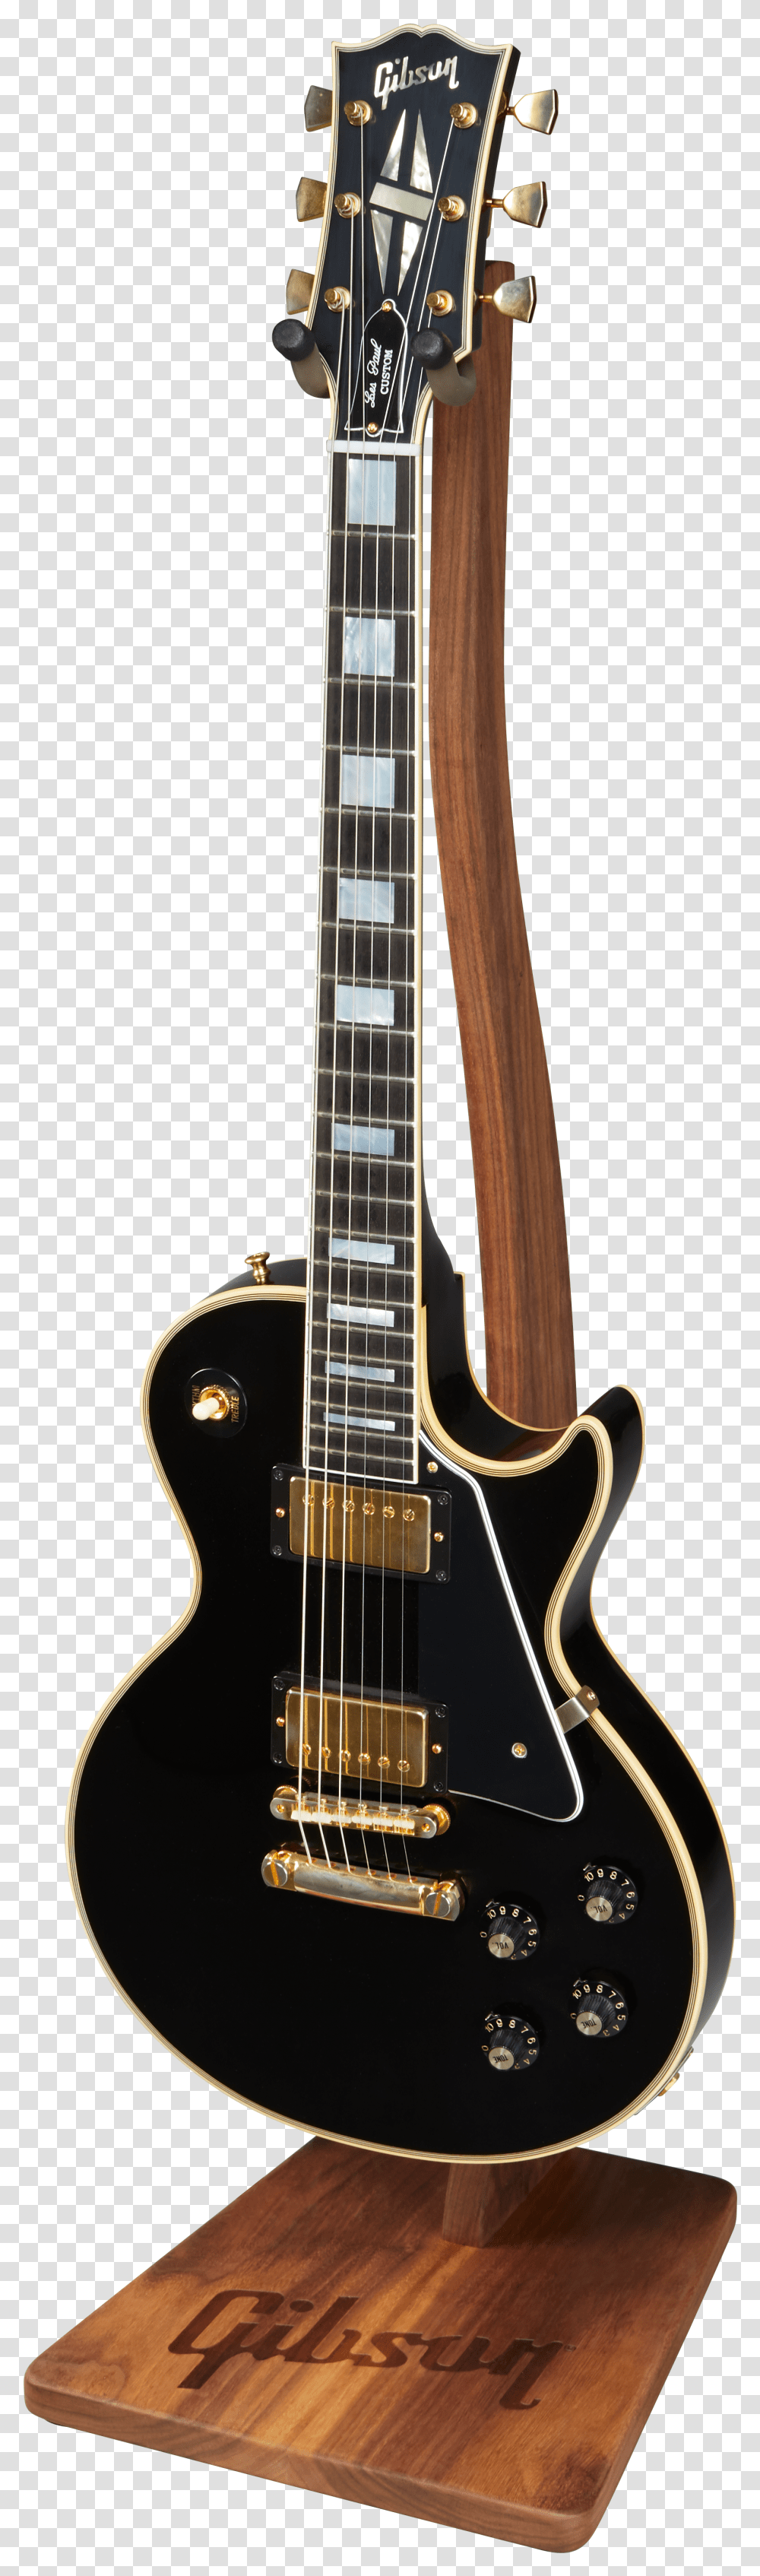 Gibson Guitar Stand Transparent Png